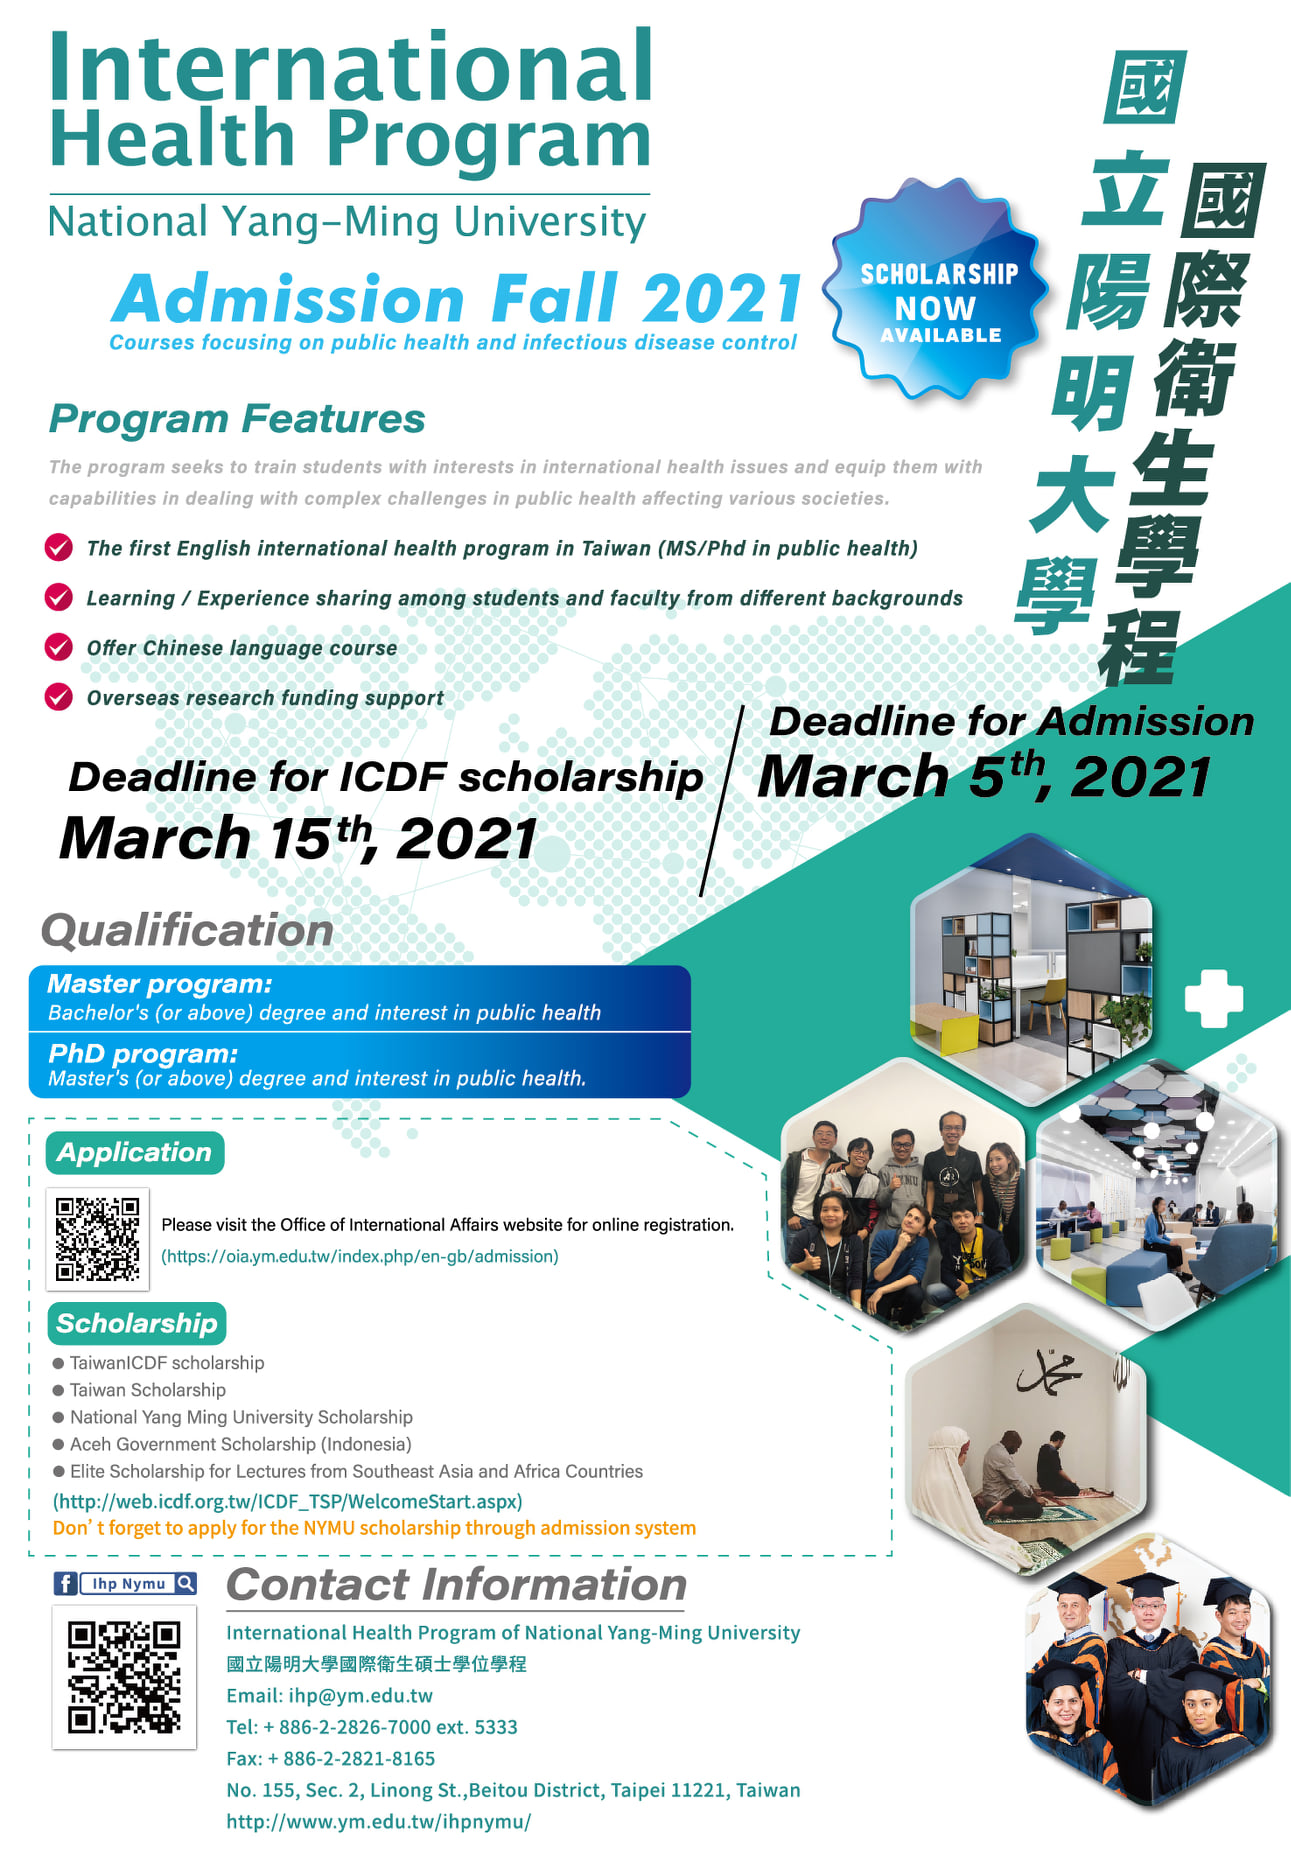 2020.1.19 National Yang-Ming University, international Health Program >Admission Fall 2021